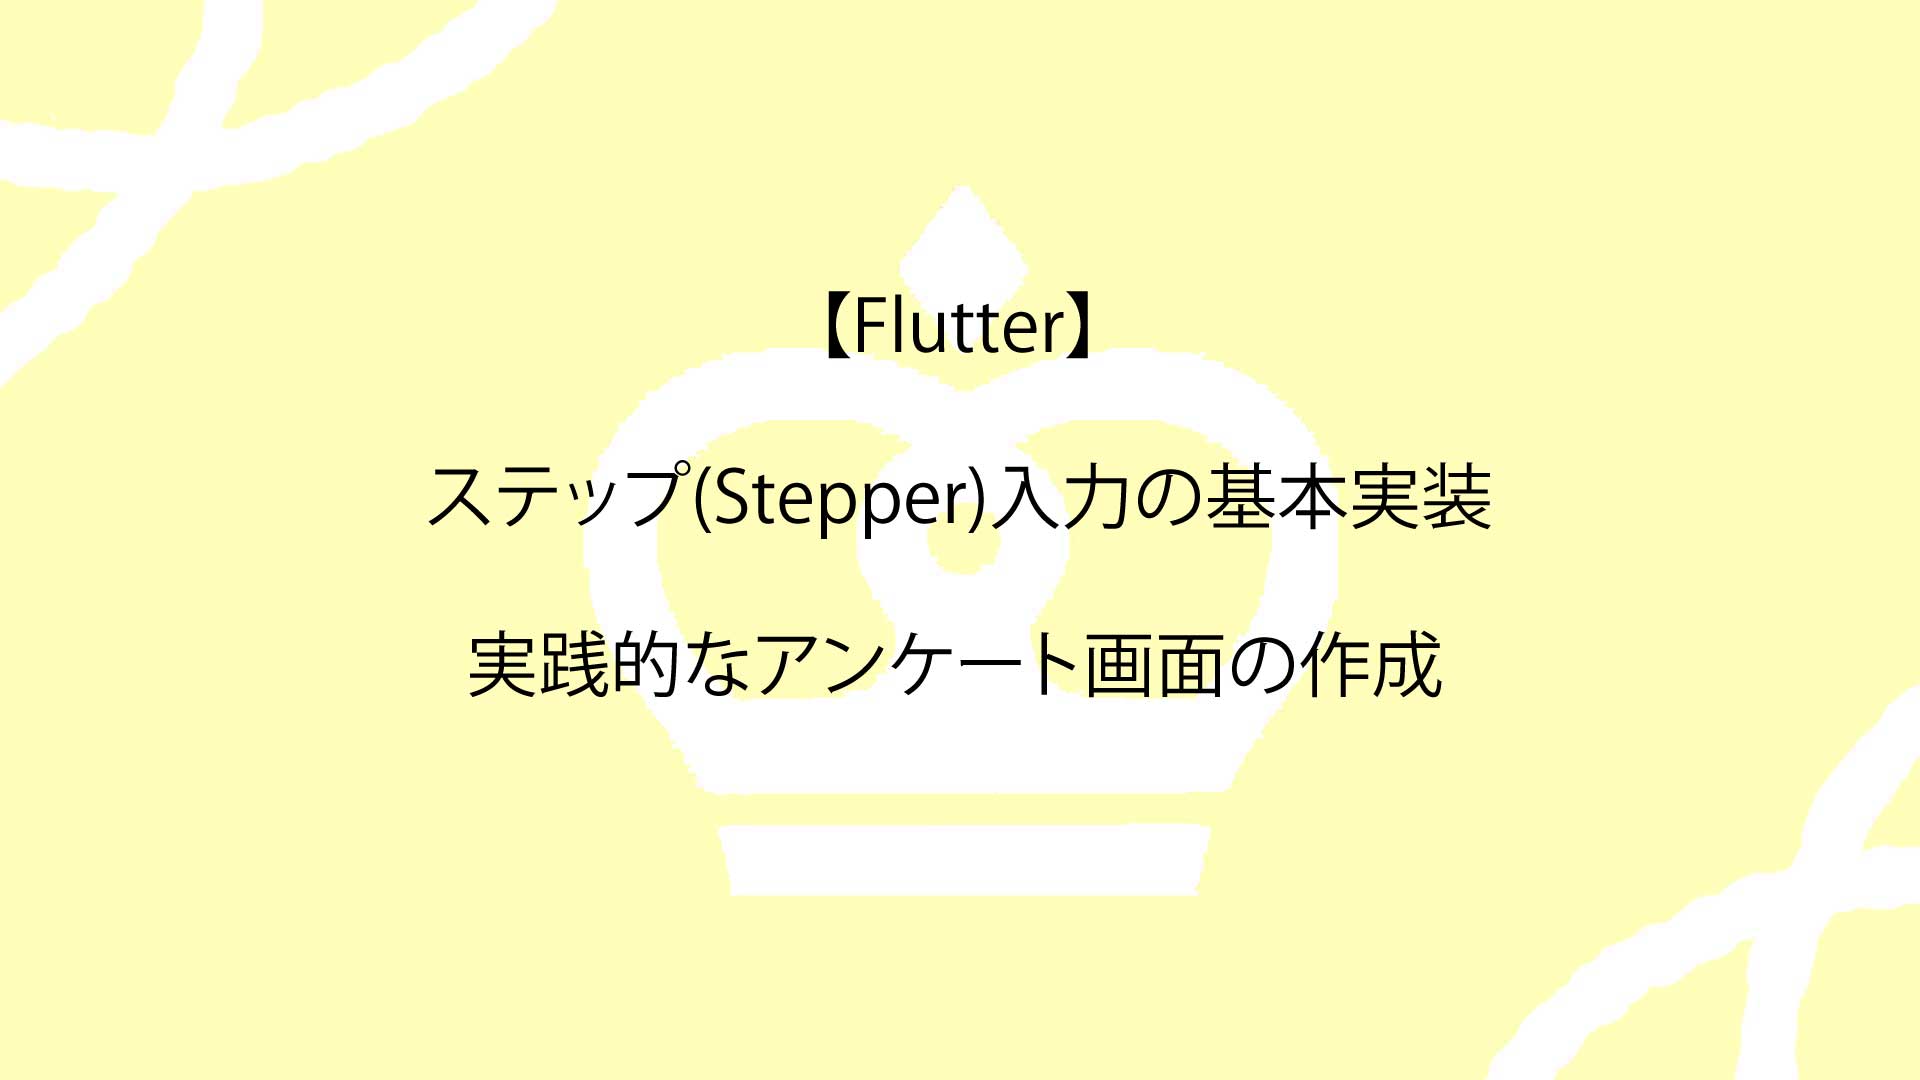 【Flutter】ステップ(Stepper)入力の基本実装から実践的なアンケート画面の作成までの完全ガイド！